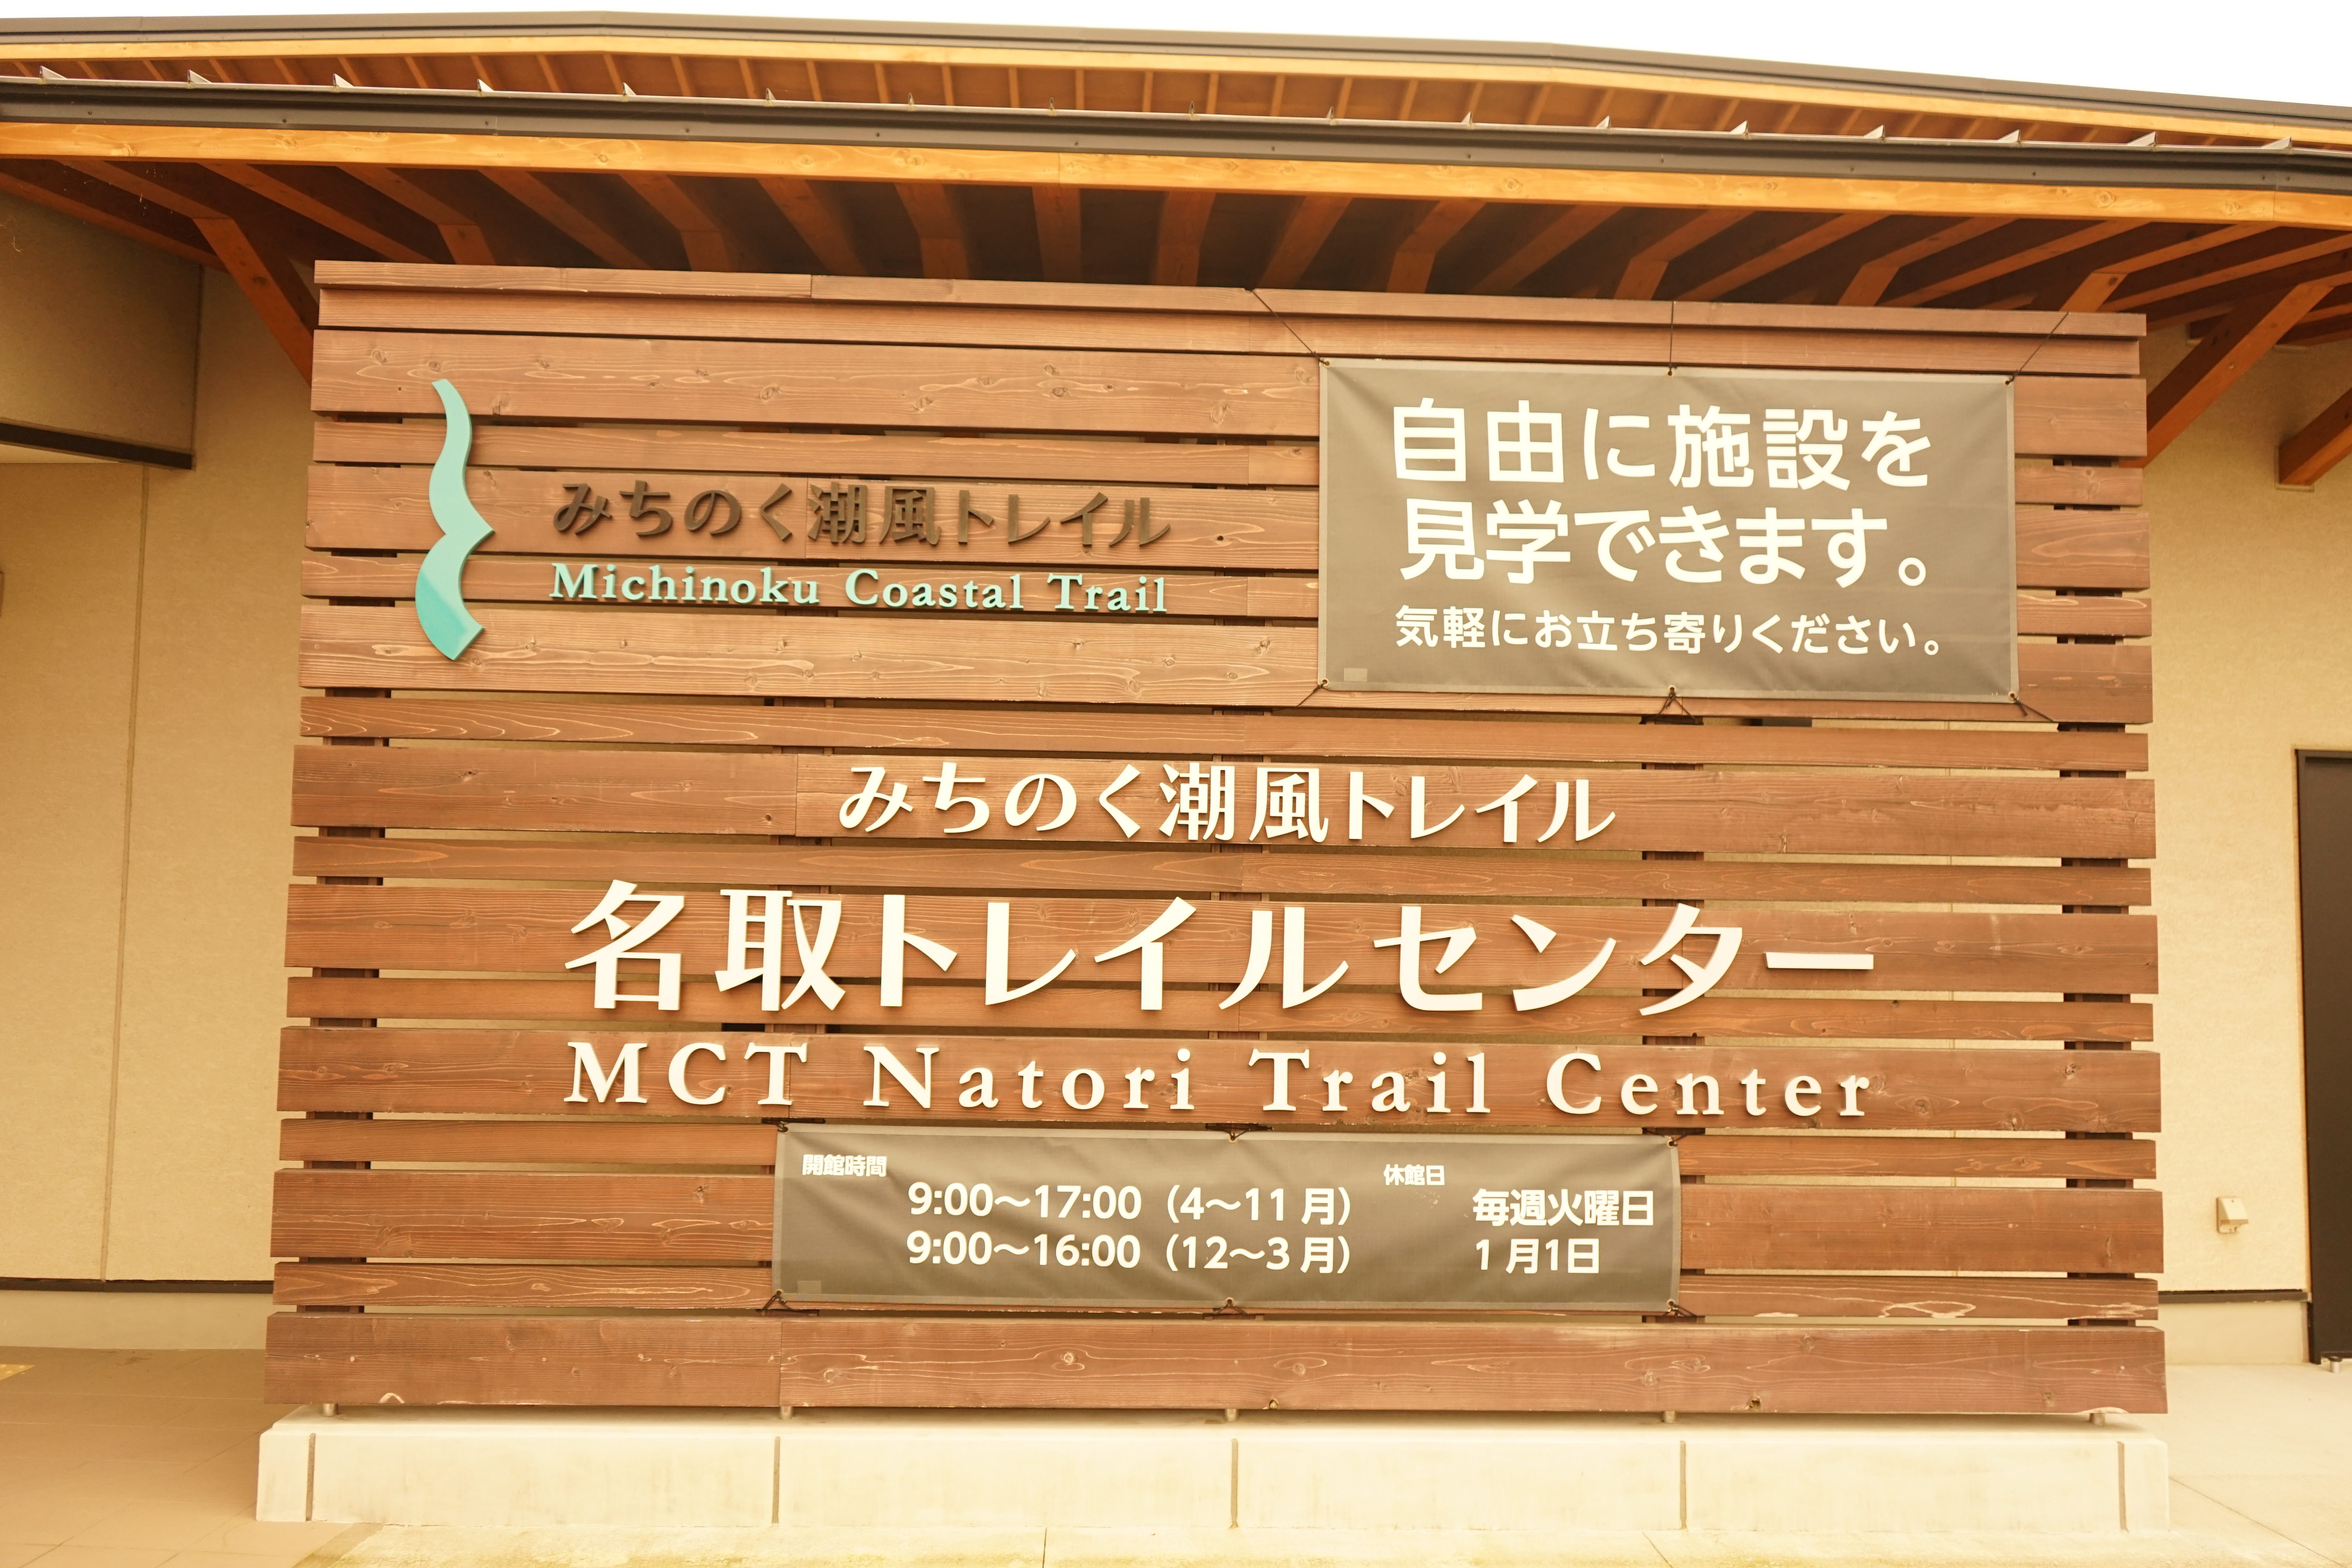 Introducing the Michinoku Trail Center!